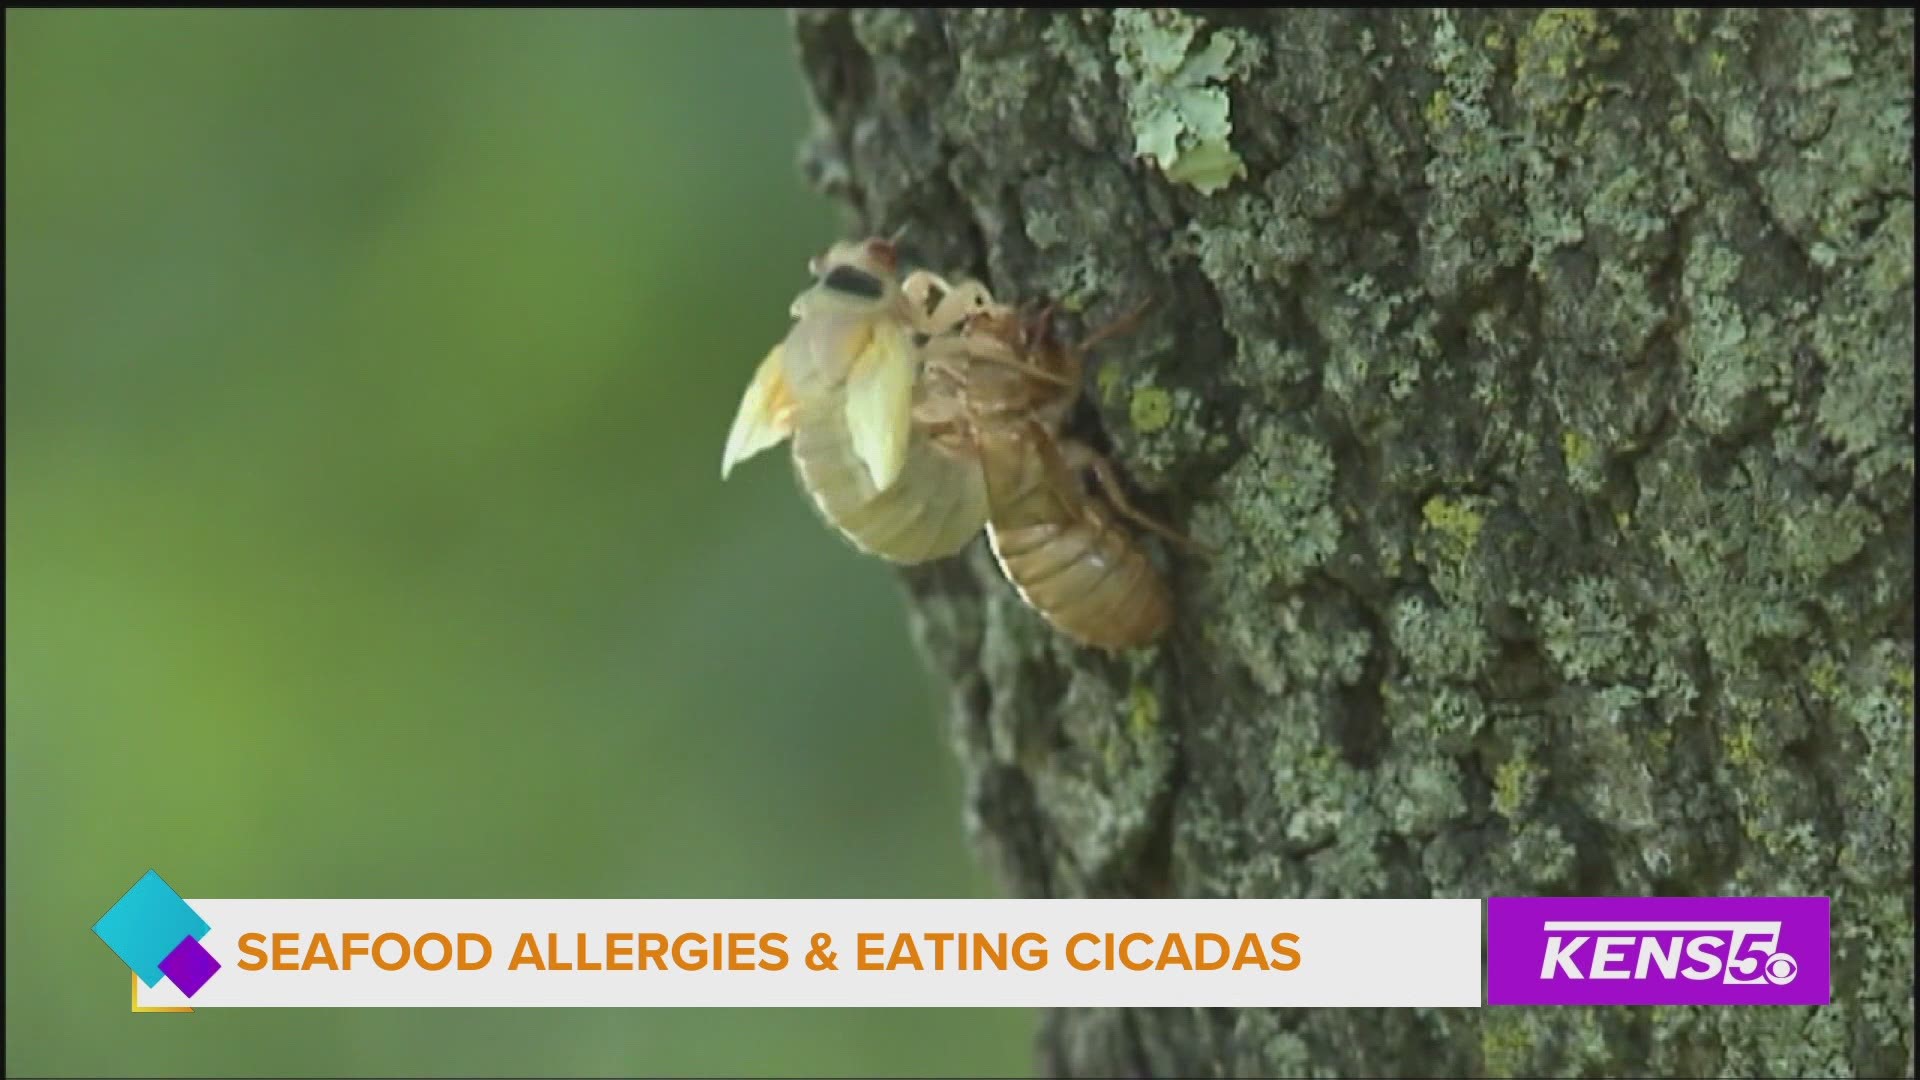 Don't eat cicadas ya'll. Just don't.